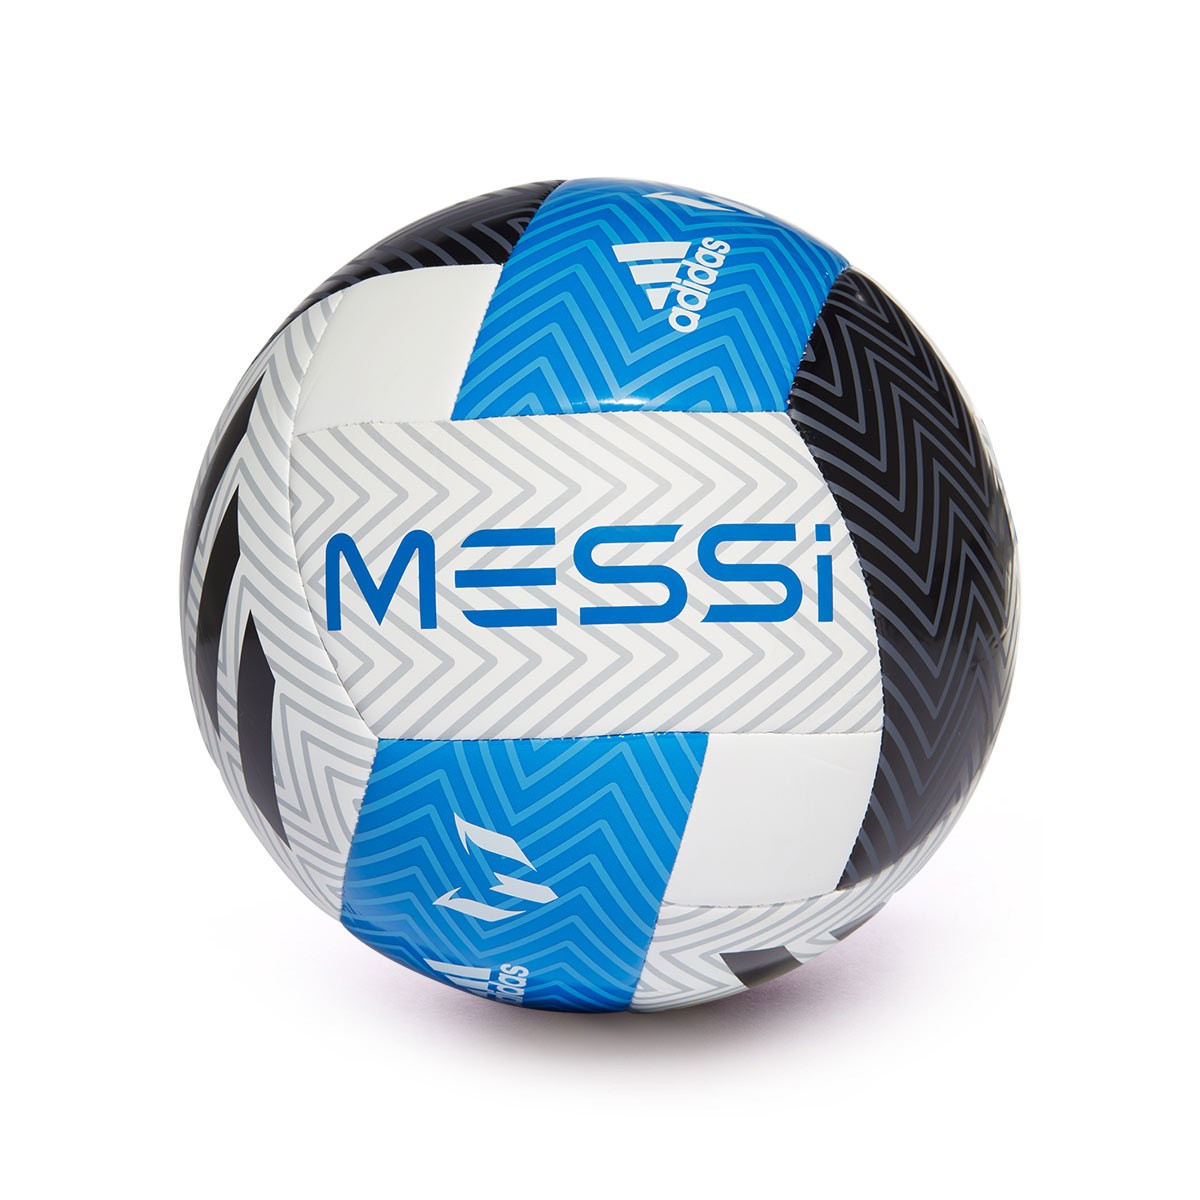 Ball adidas Messi Football blue-Black 